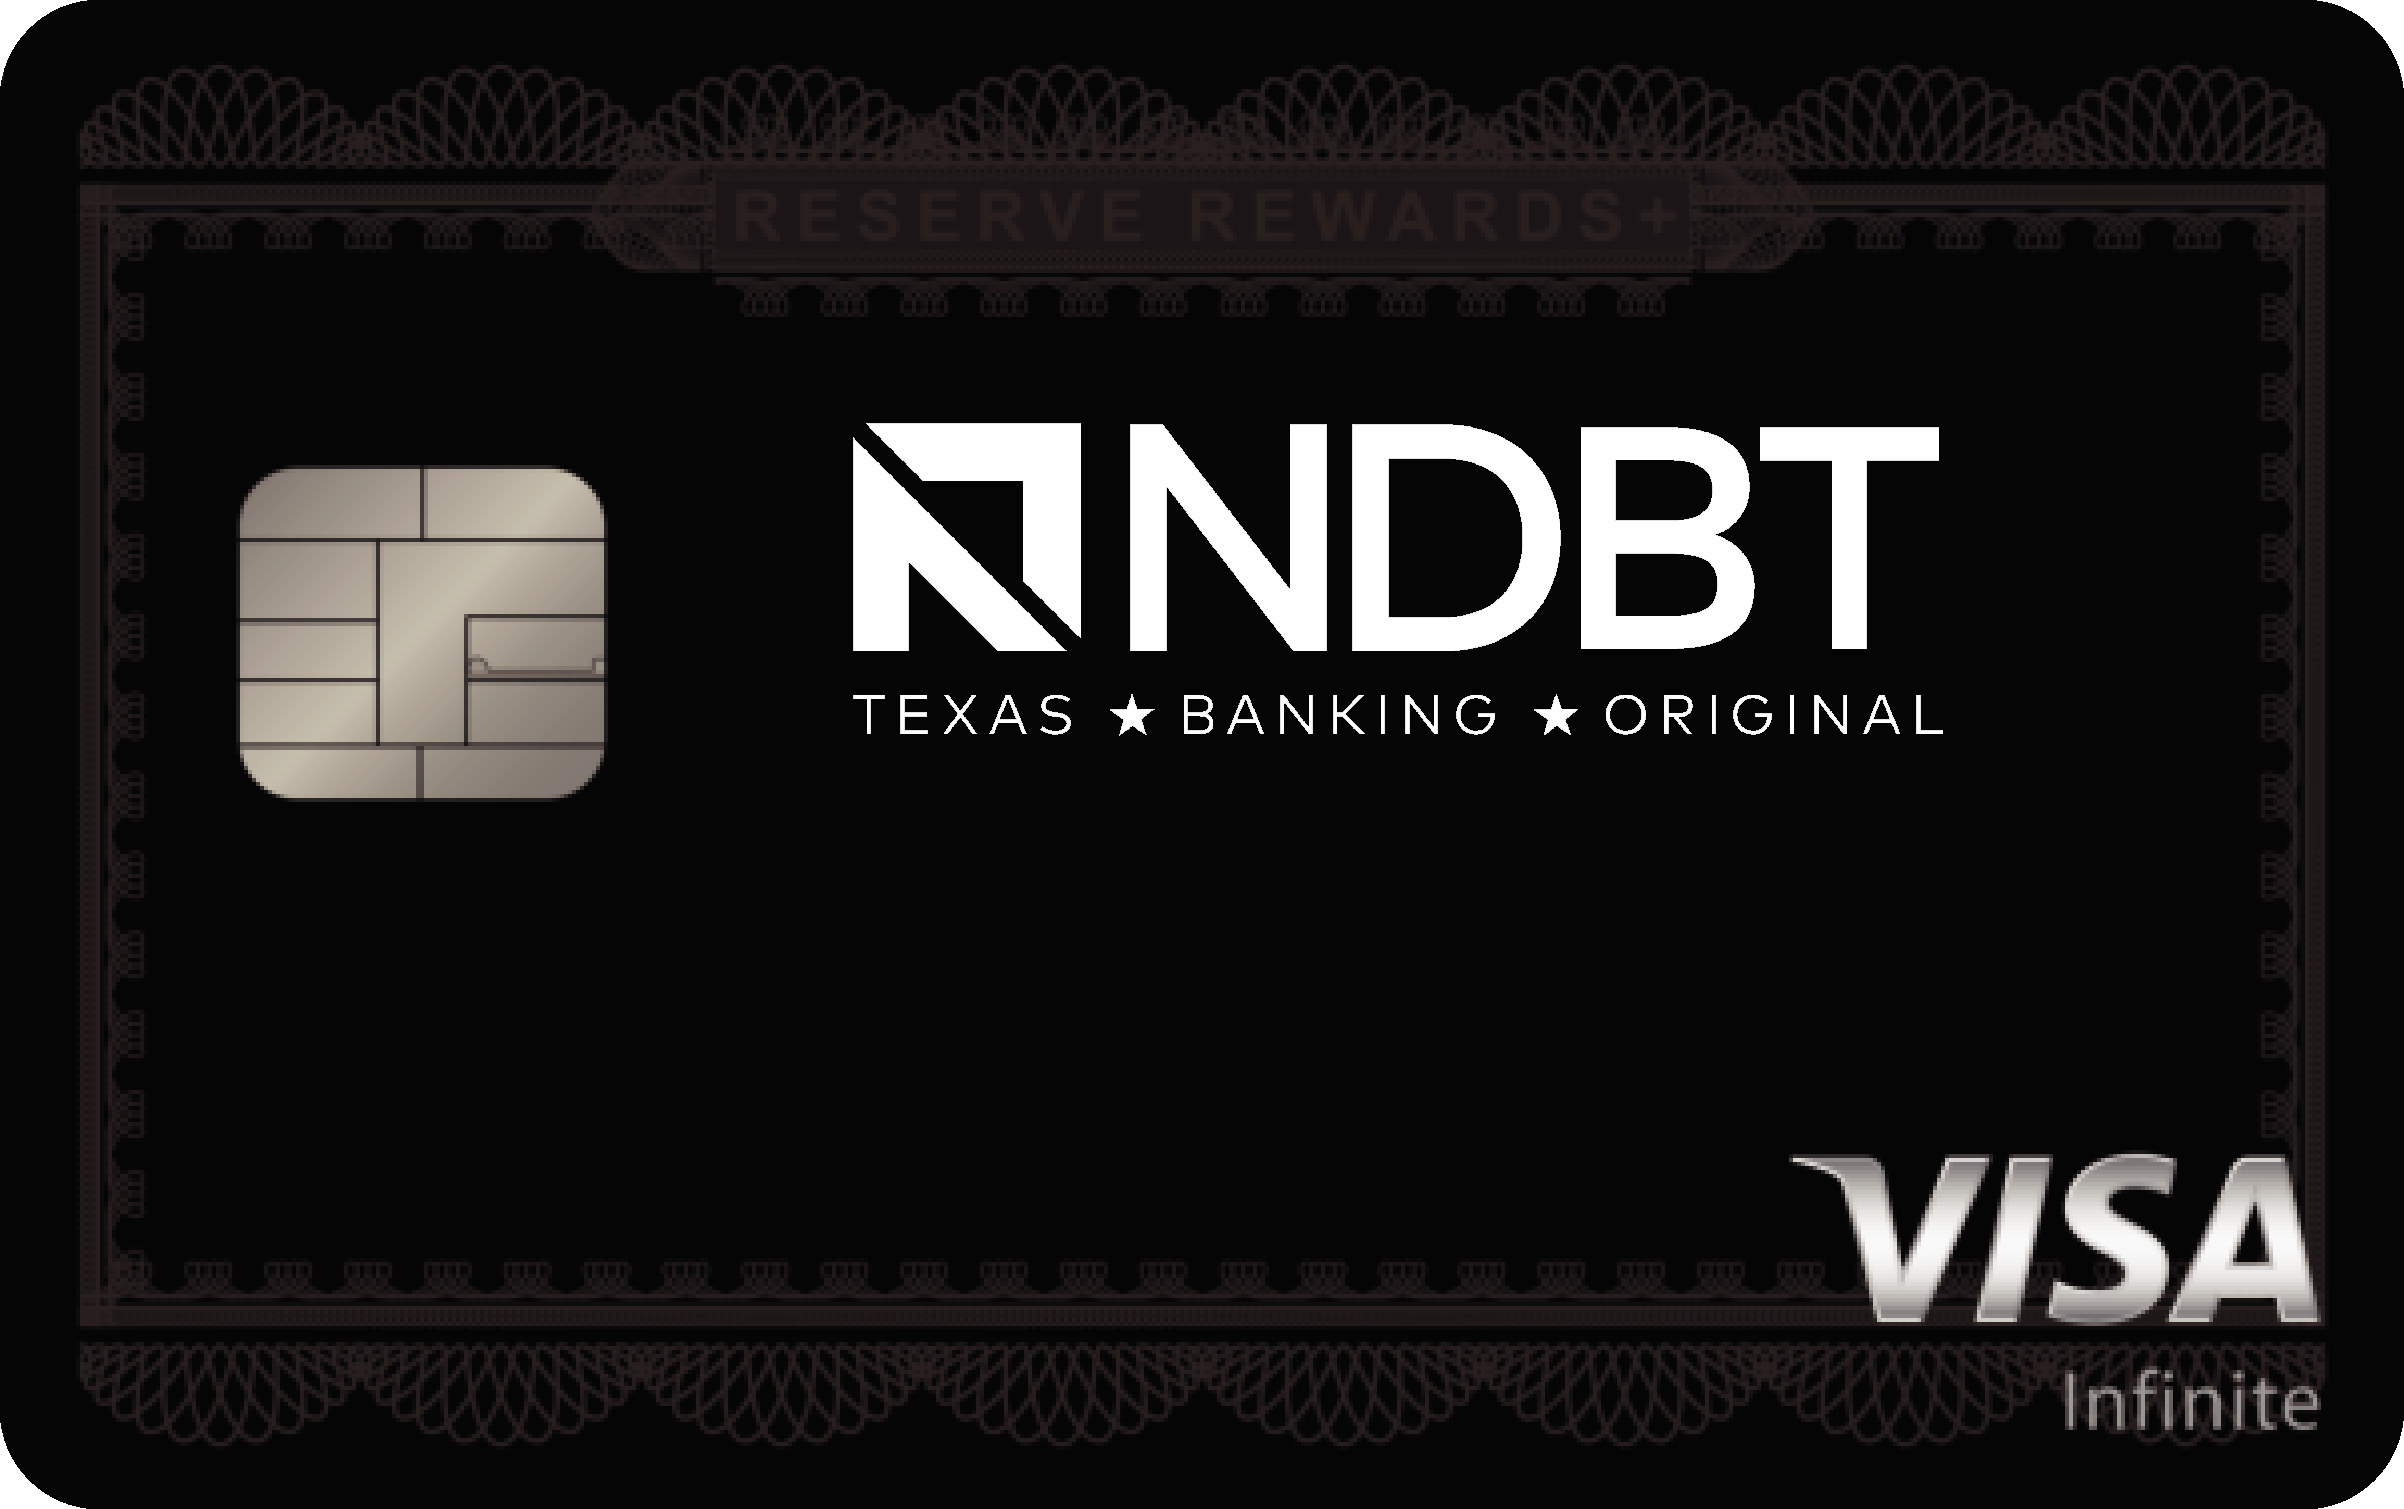 North Dallas Bank & Trust Co. Reserve Rewards+ Card